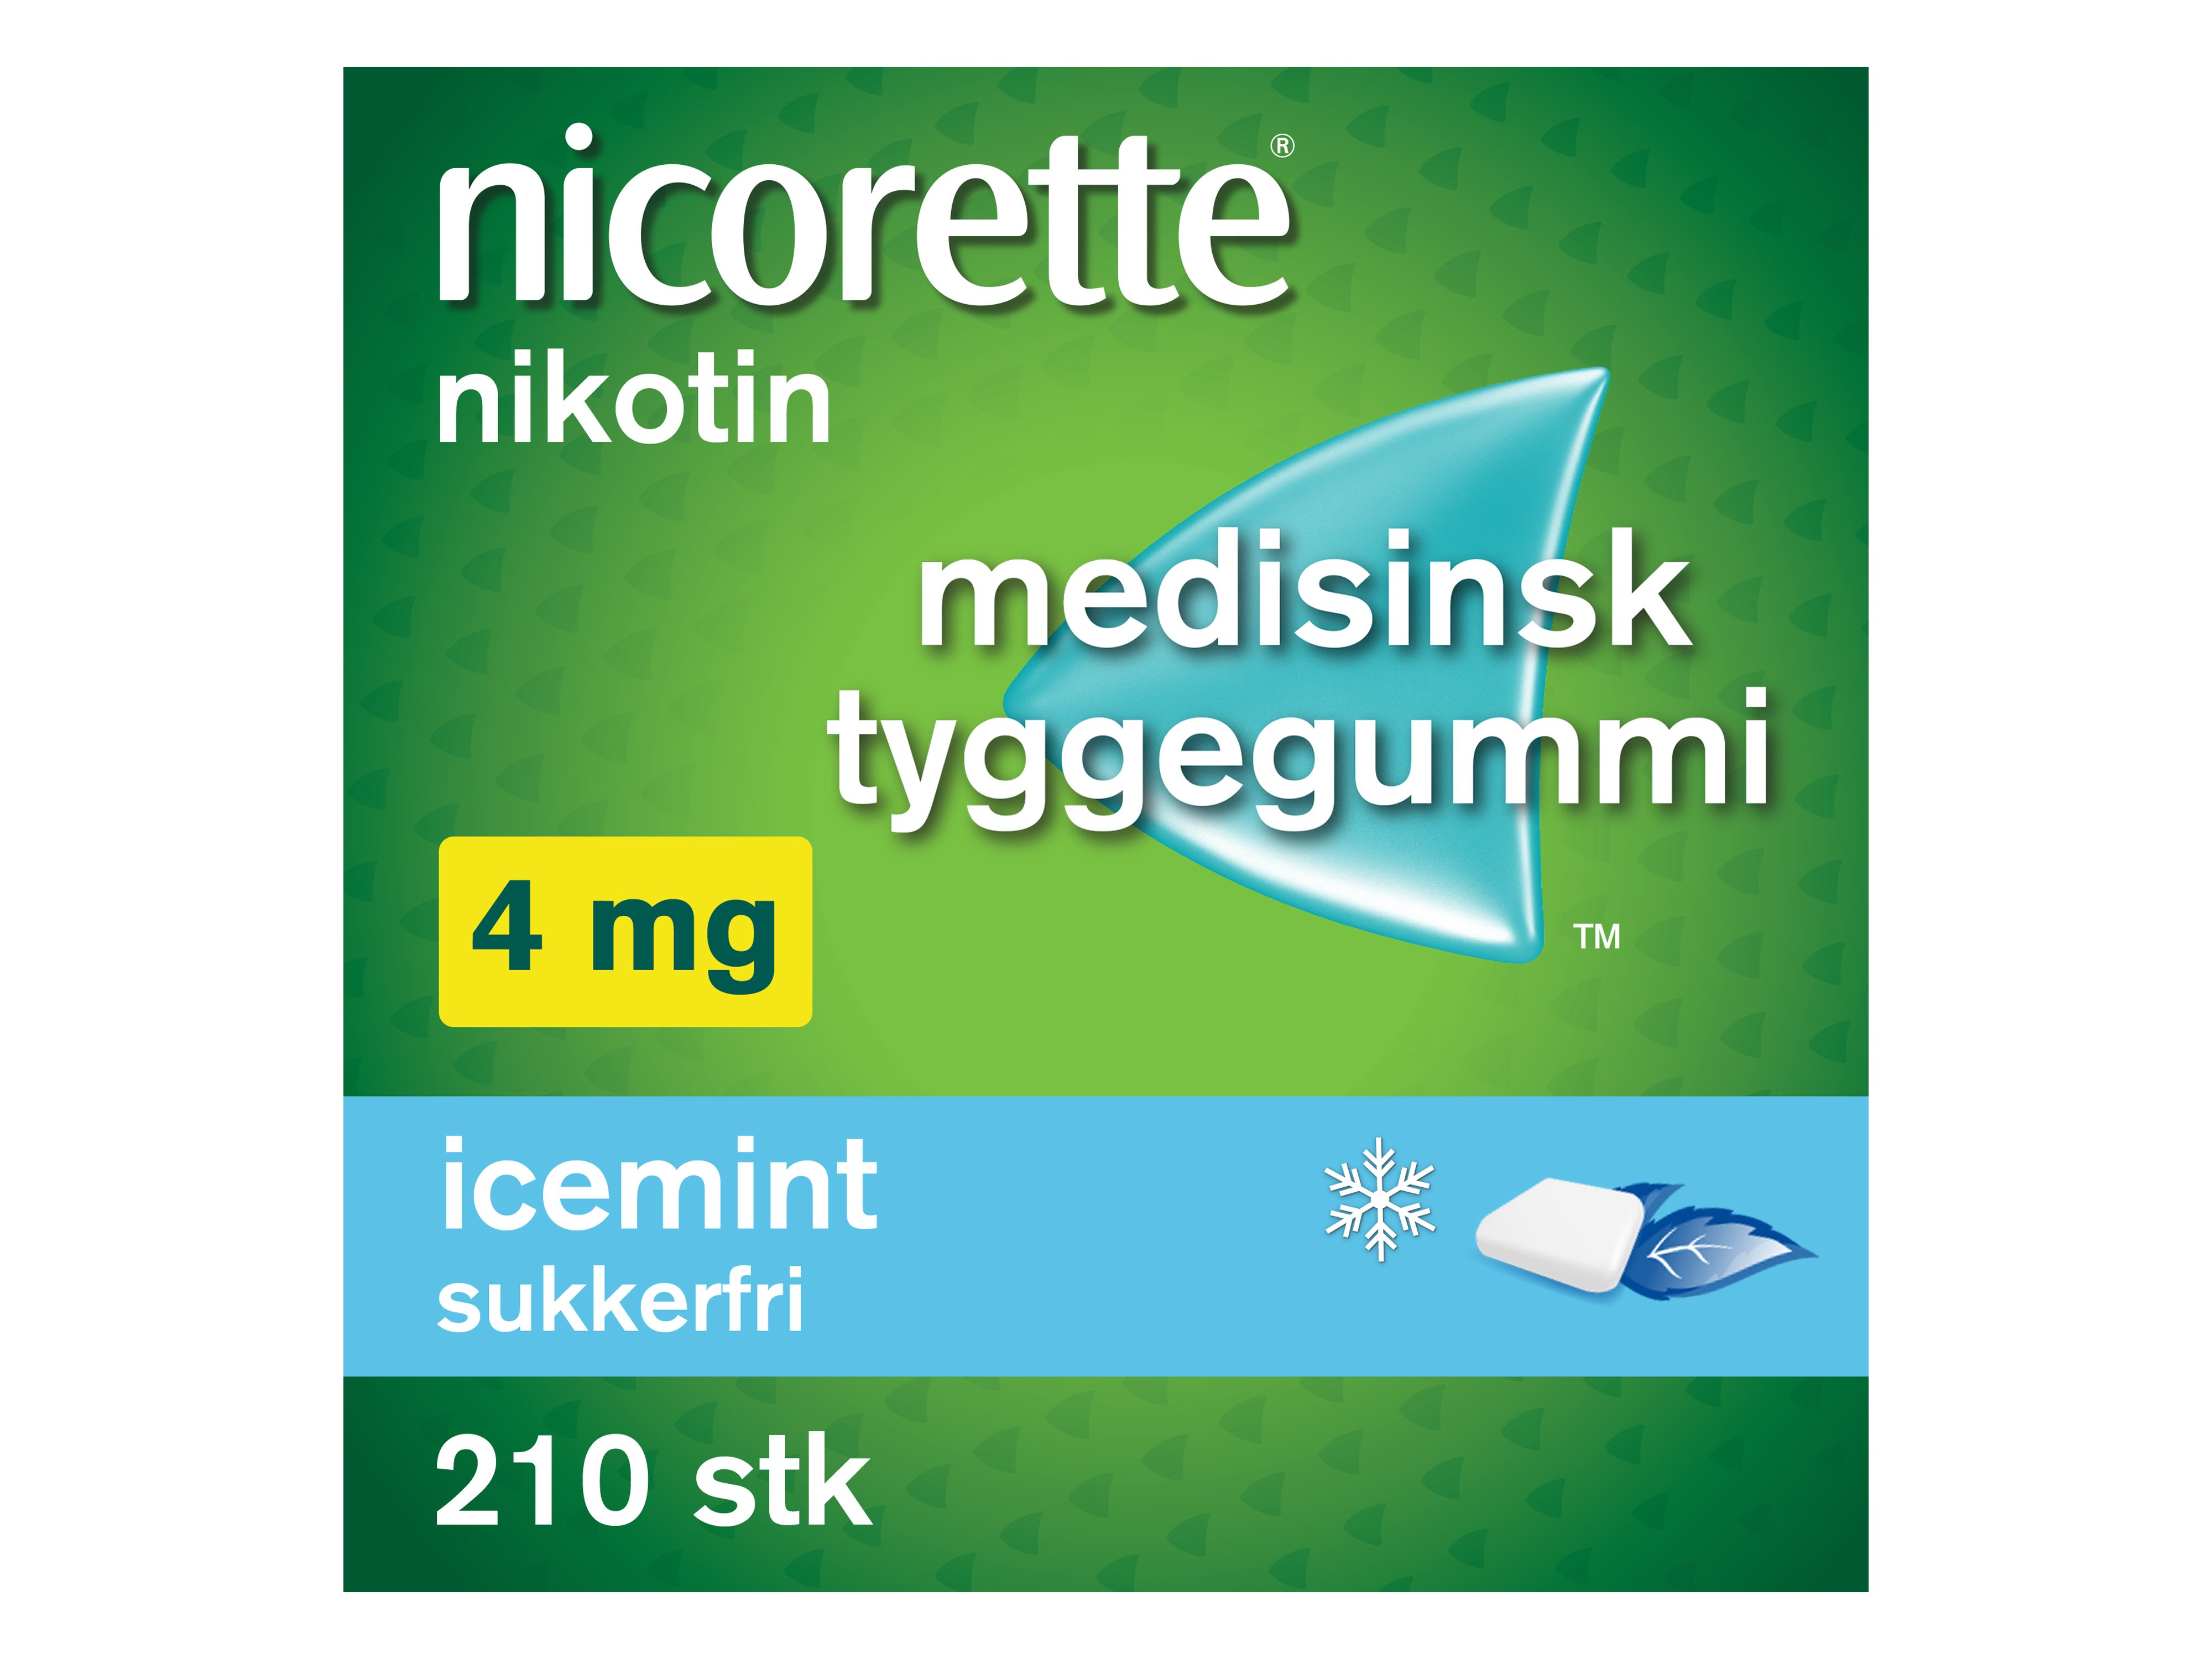 Nicorette 4 mg tyggegummi, Icemint, 210 stk.